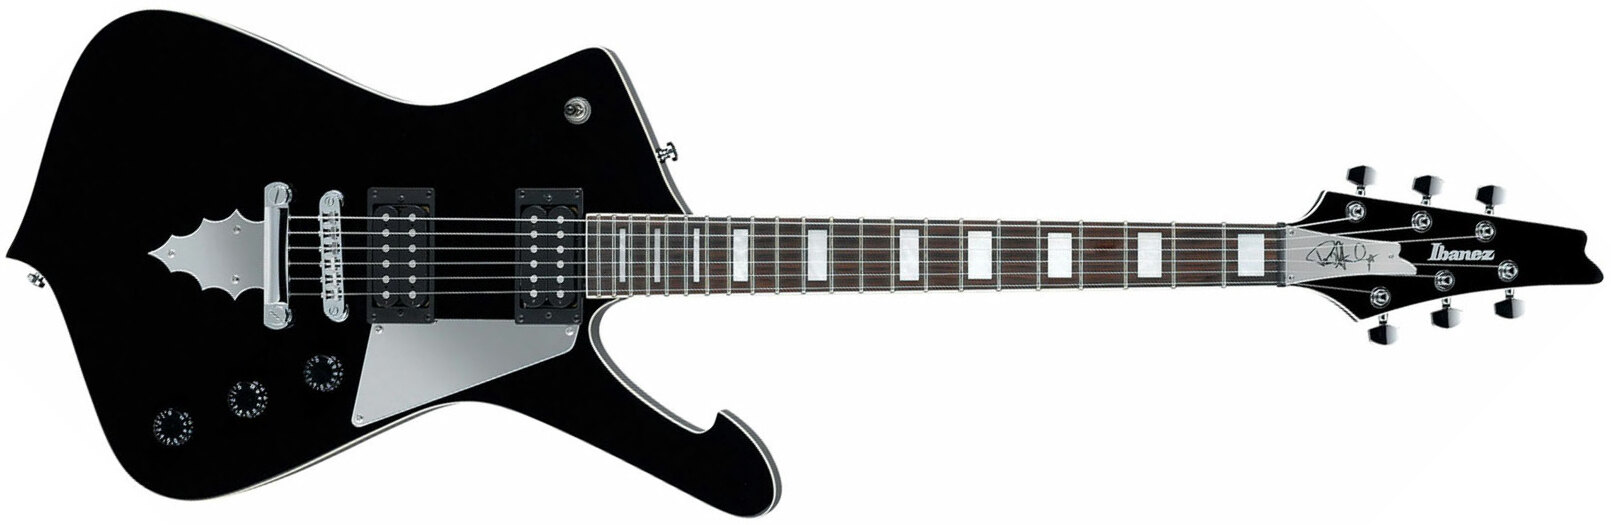 Ibanez Paul Stanley Ps60 Bk Signature Hh Ht Pur - Black - Guitarra electrica metalica - Main picture